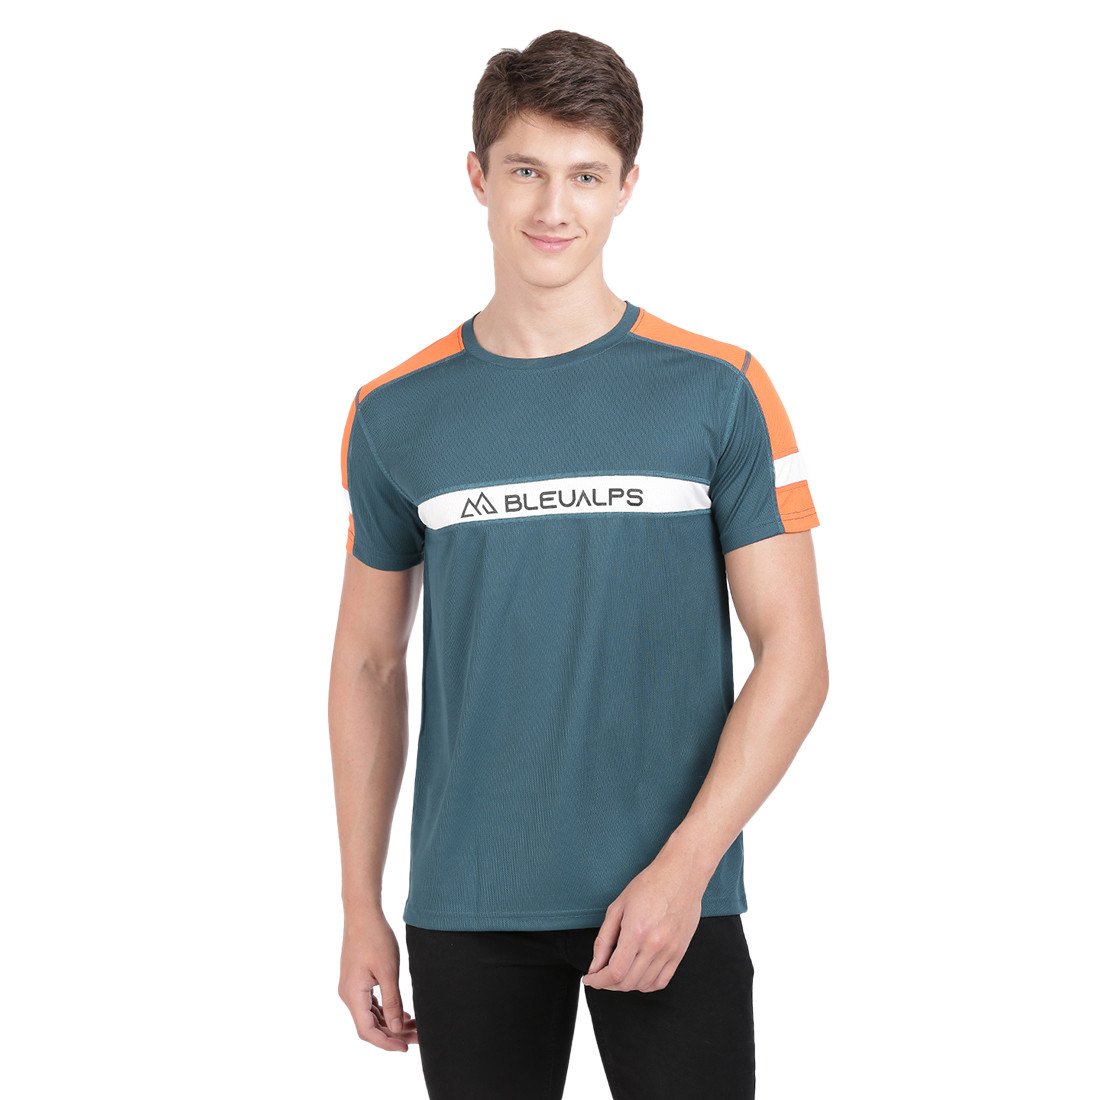 Bleualps Active Mens Round Neck Cut N Sewn Design Sports Half Sleeve T-Shirt | Sports T-Shirt | Workout T-Shirt